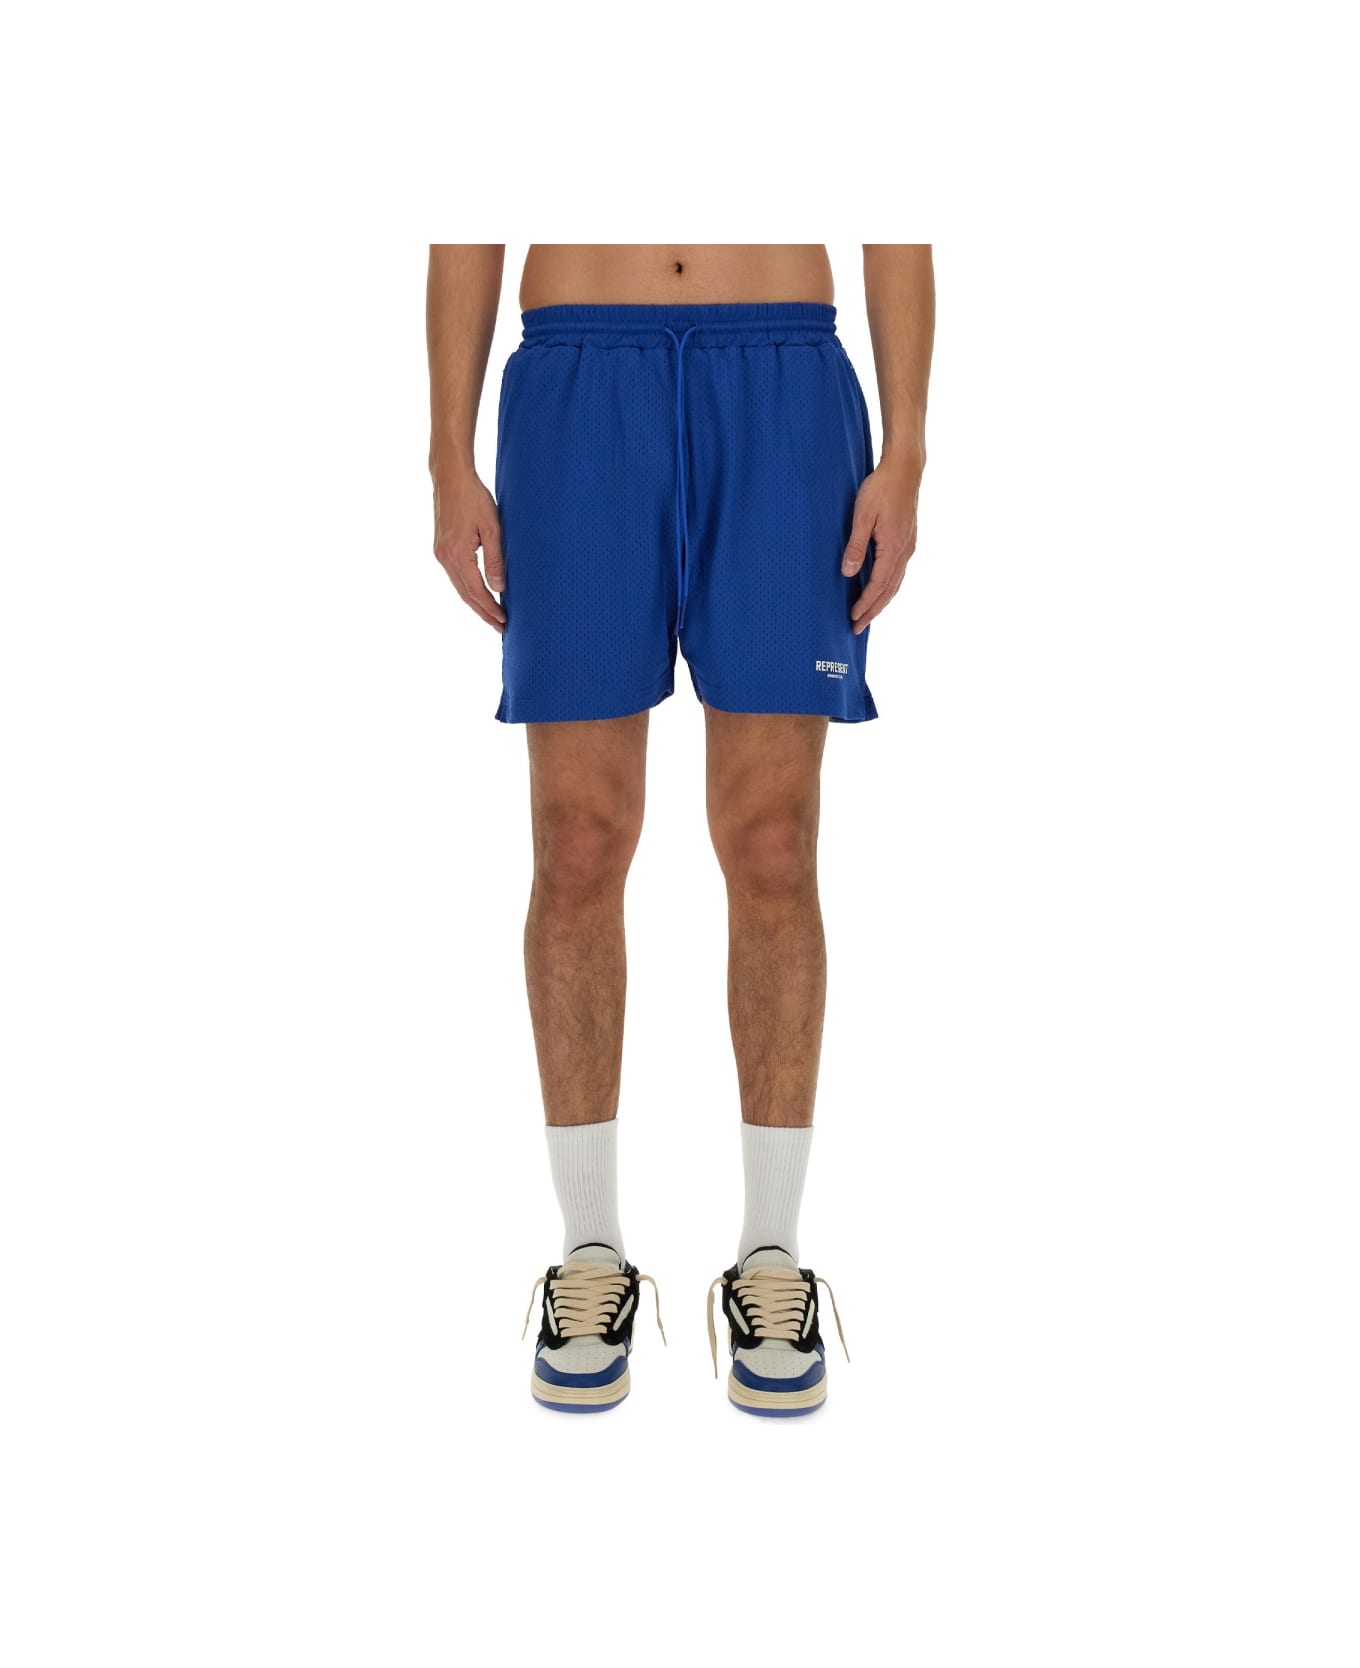 REPRESENT Mesh Bermuda Shorts - BLUE